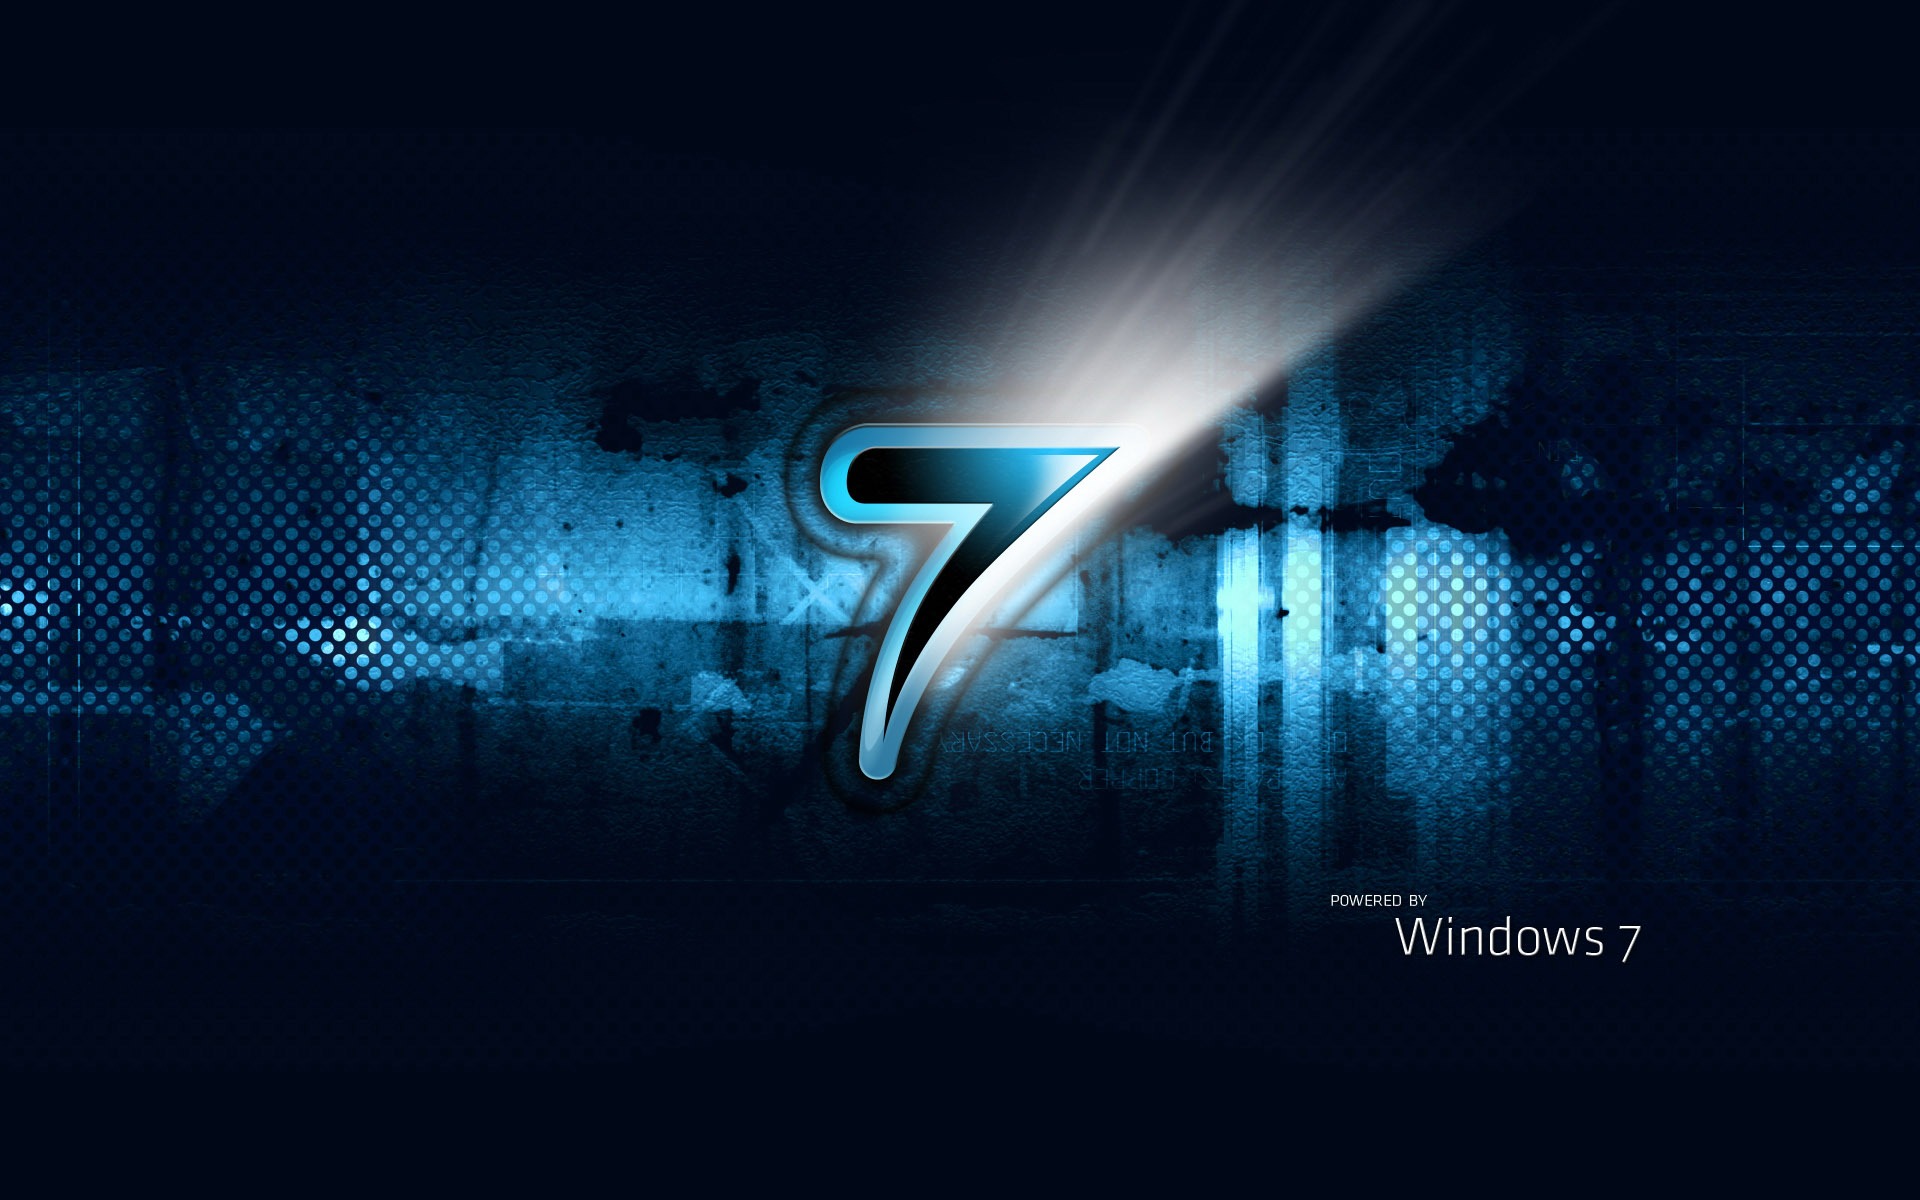 Windows7のテーマの壁紙 2 8 19x10 壁紙ダウンロード Windows7のテーマの壁紙 2 システム 壁紙 V3の壁紙